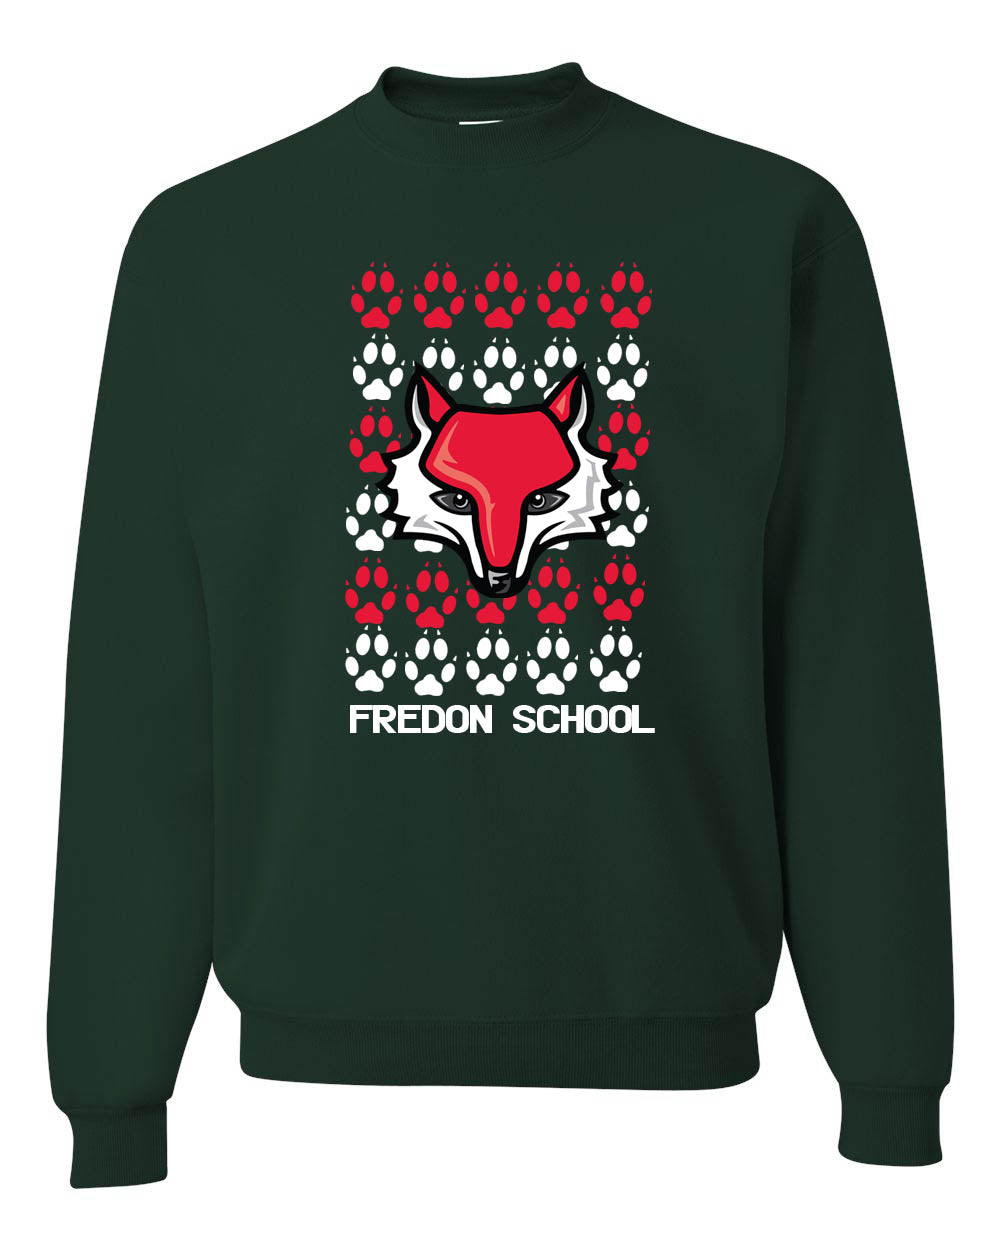 Fredon Design 3 non hooded sweatshirt